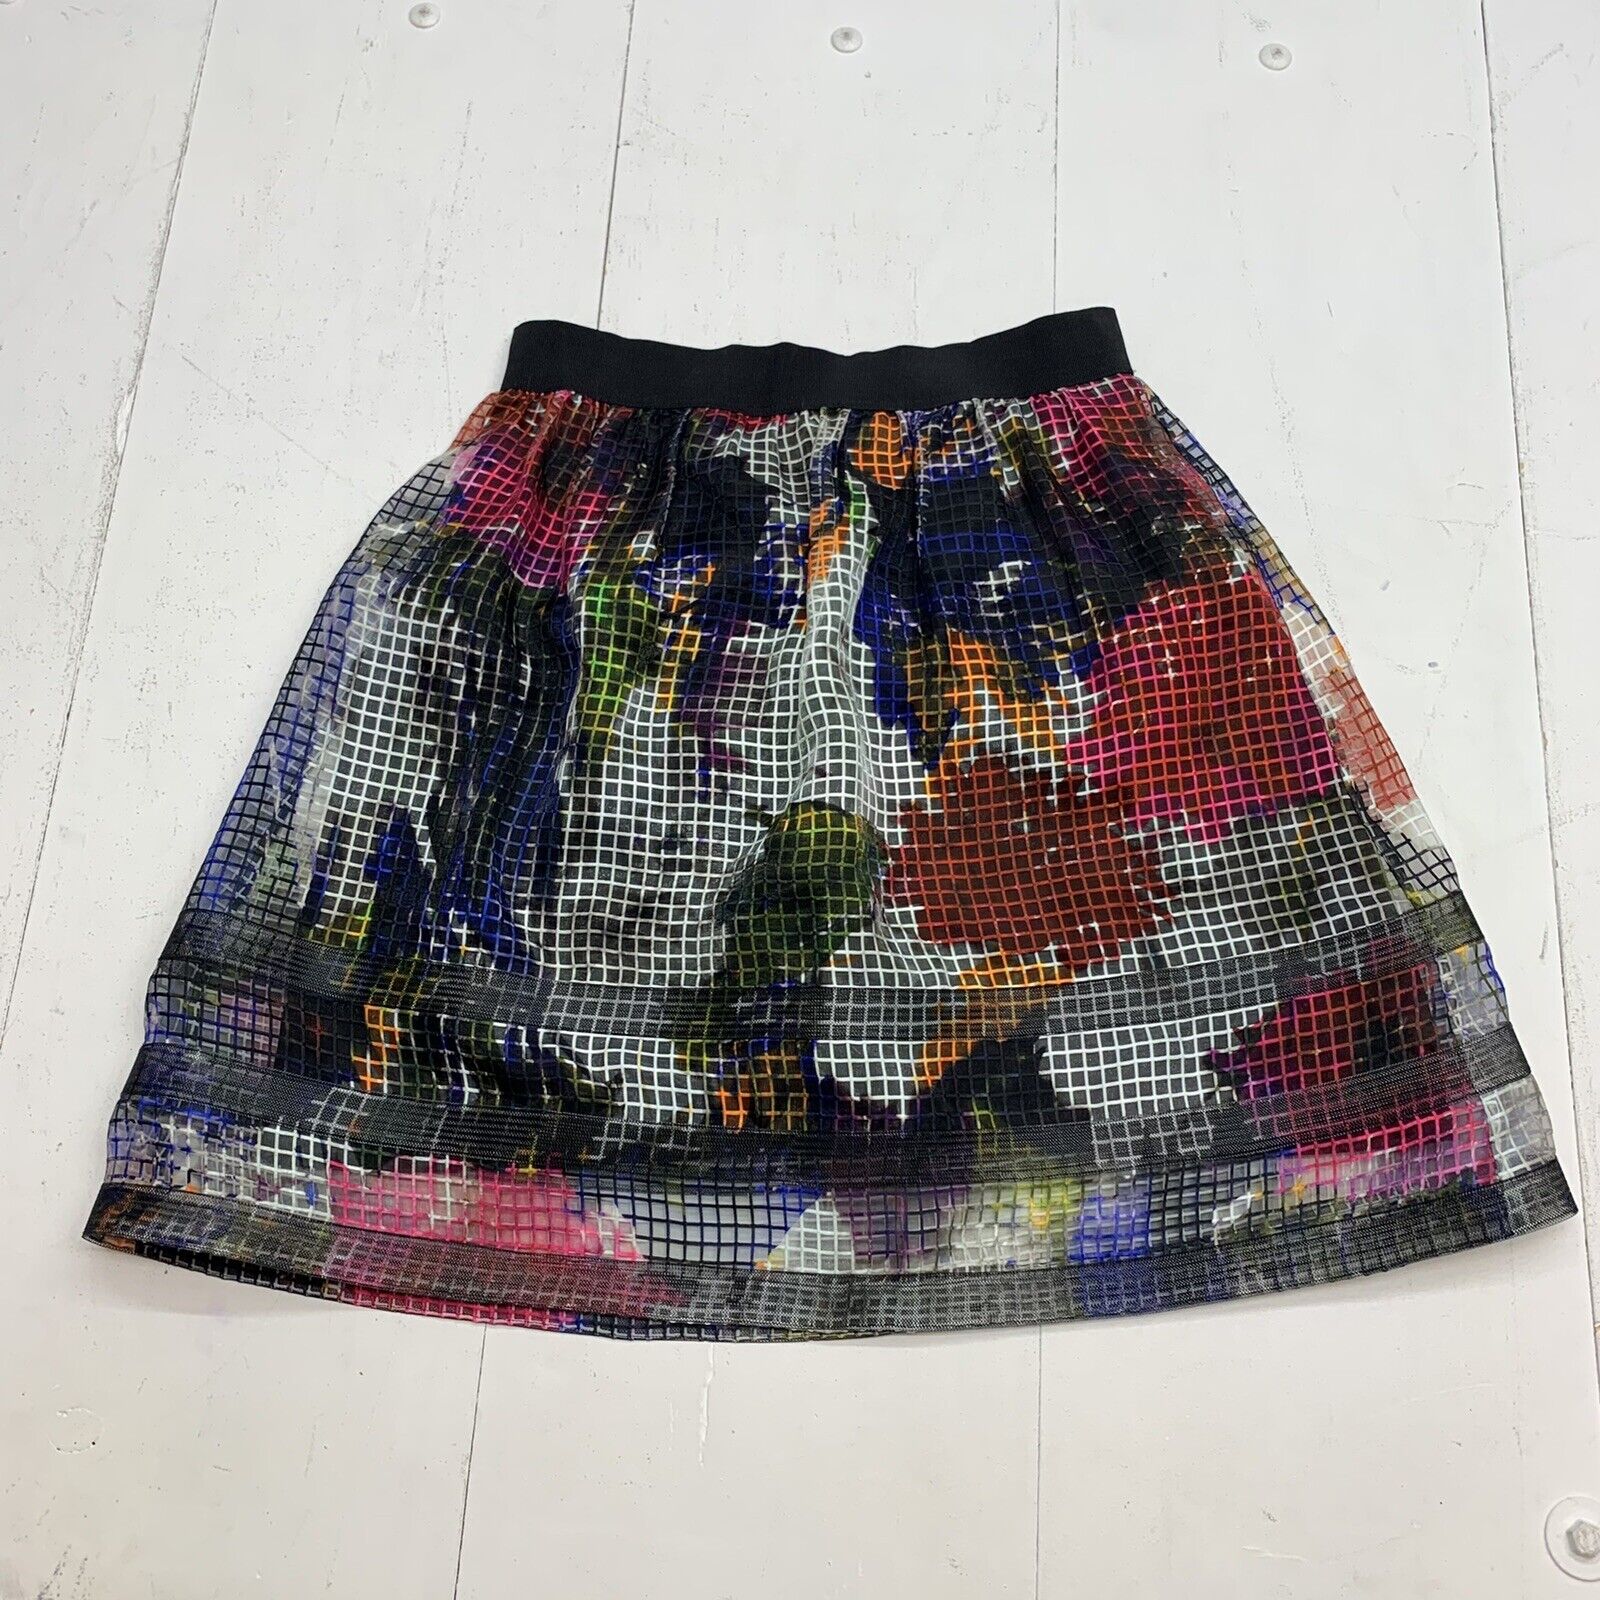 Phoebe Womens Multicor Square print Skirt size 12